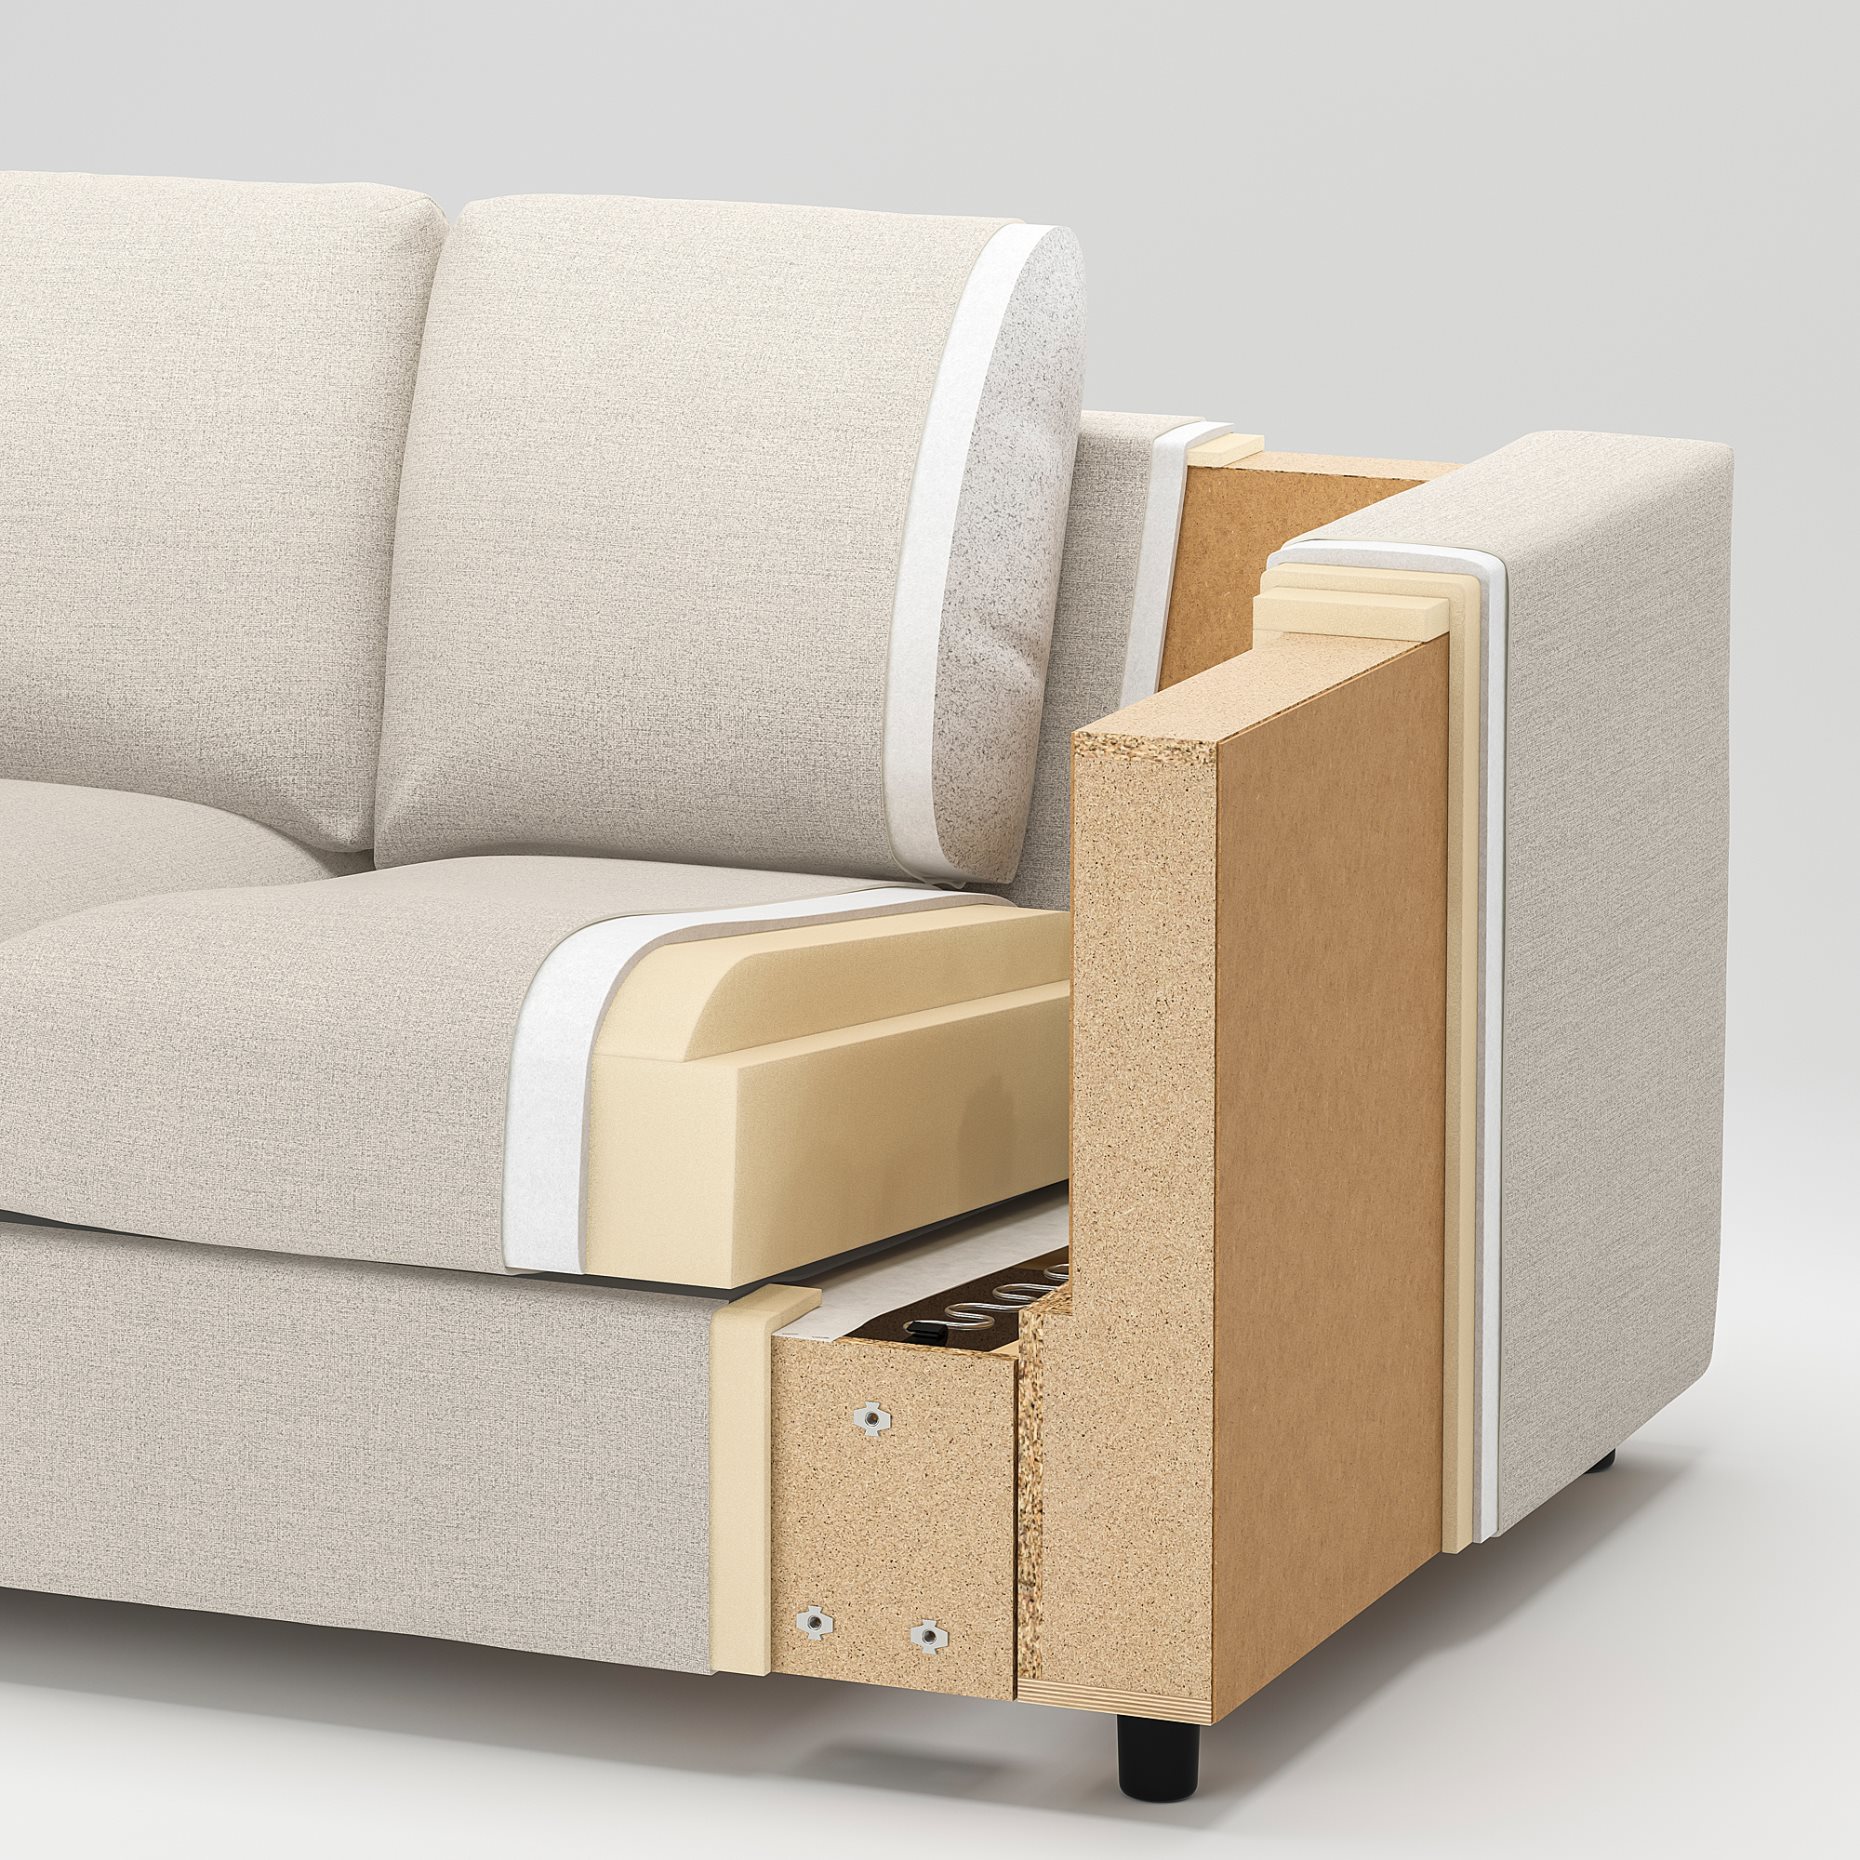 VIMLE, corner sofa, 5-seat with chaise longue, 093.996.70